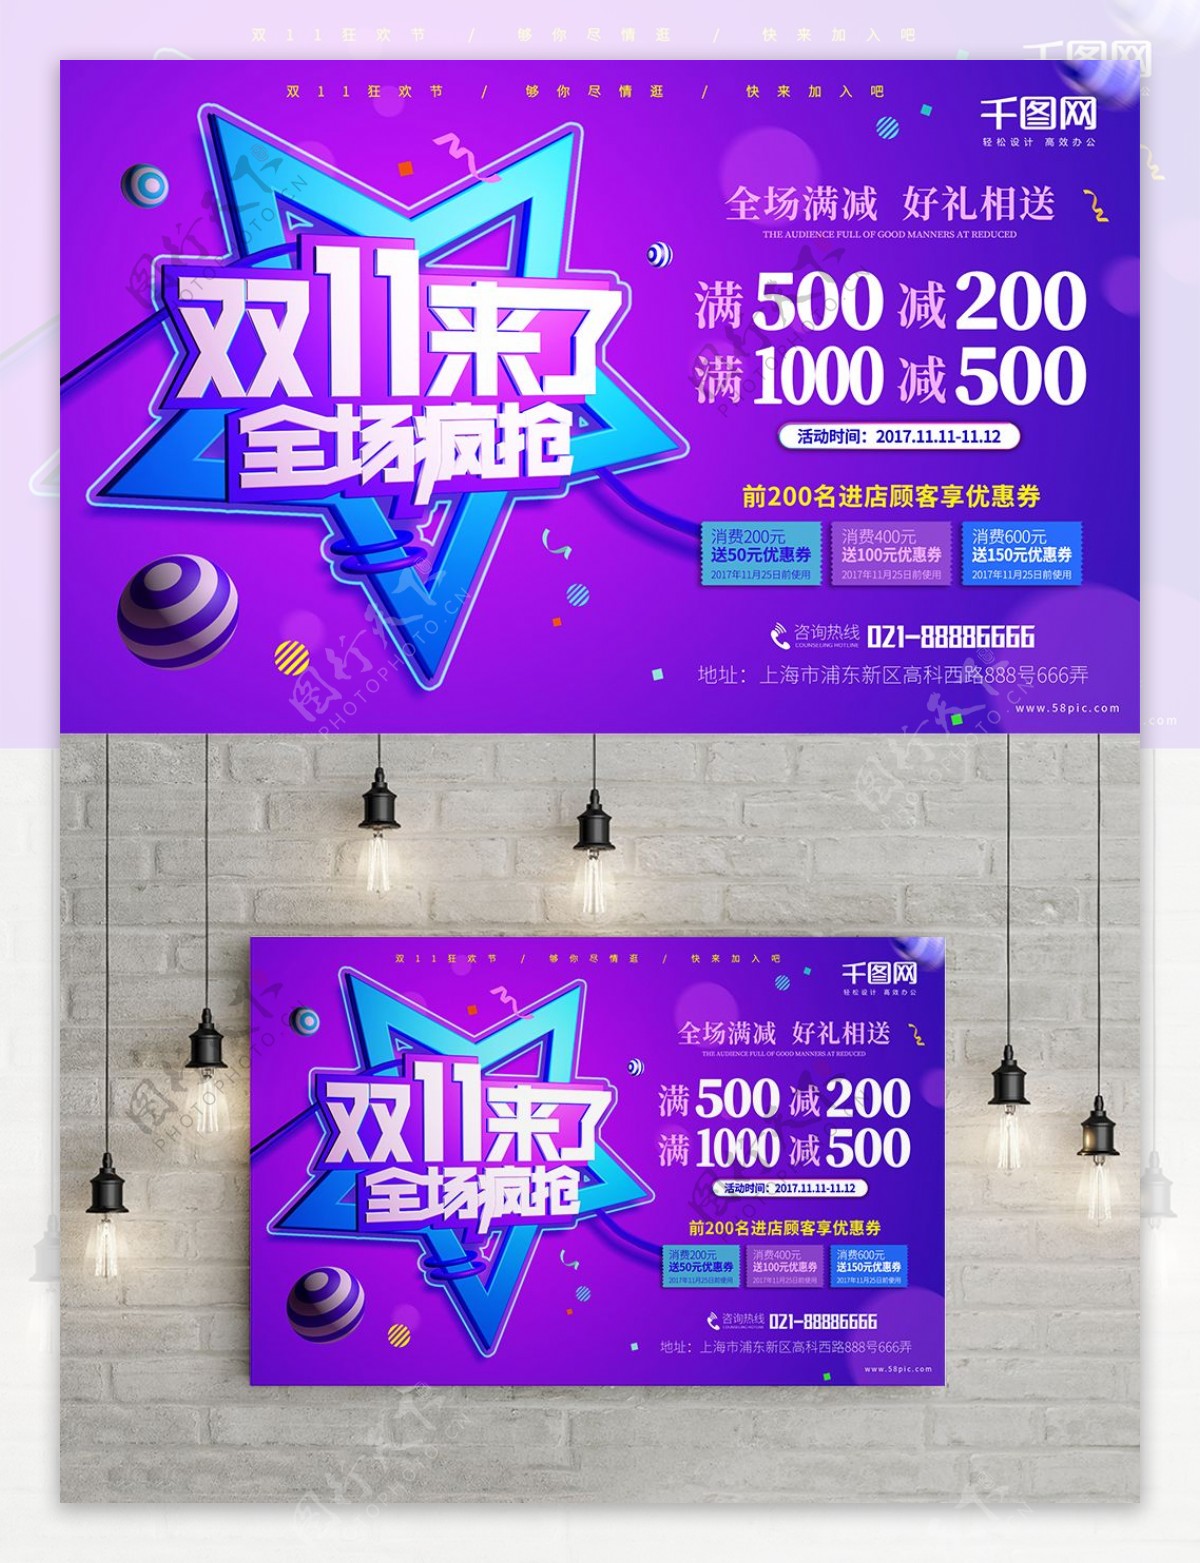 C4D渲染蓝紫色双11活动促销海报